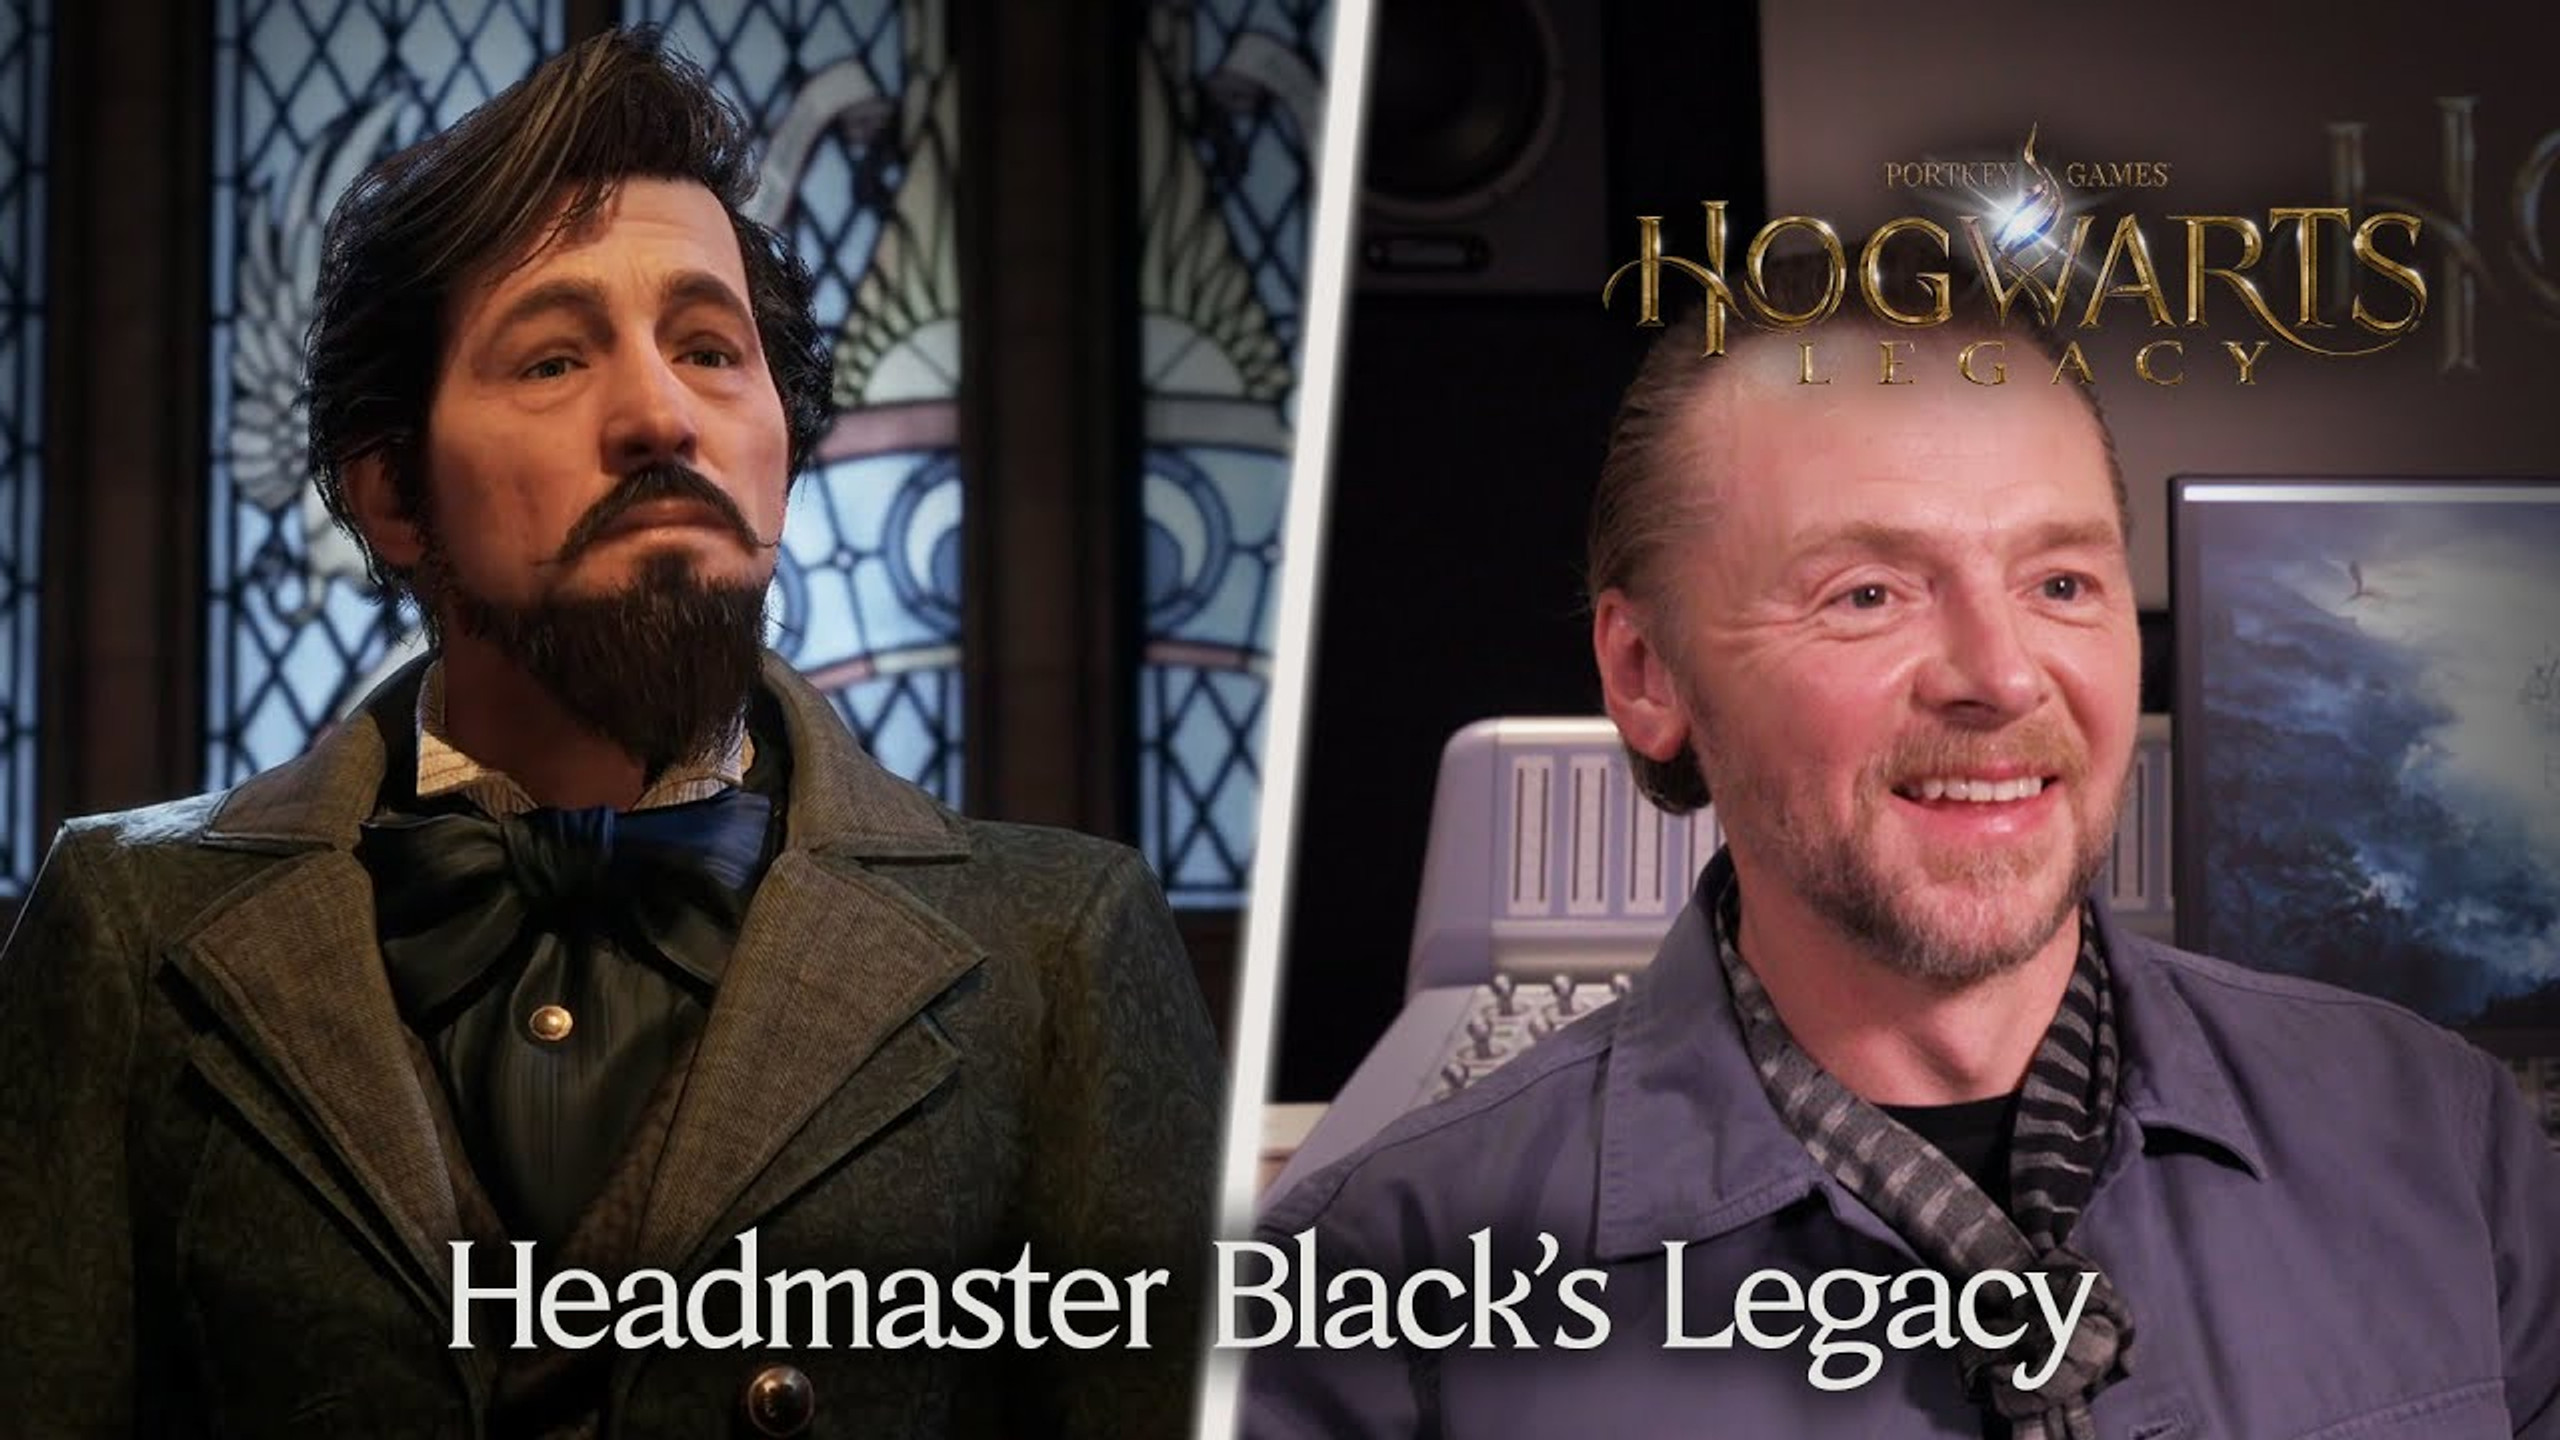 Simon-pegg-hogwarts-legacy-phineas-black-directeur